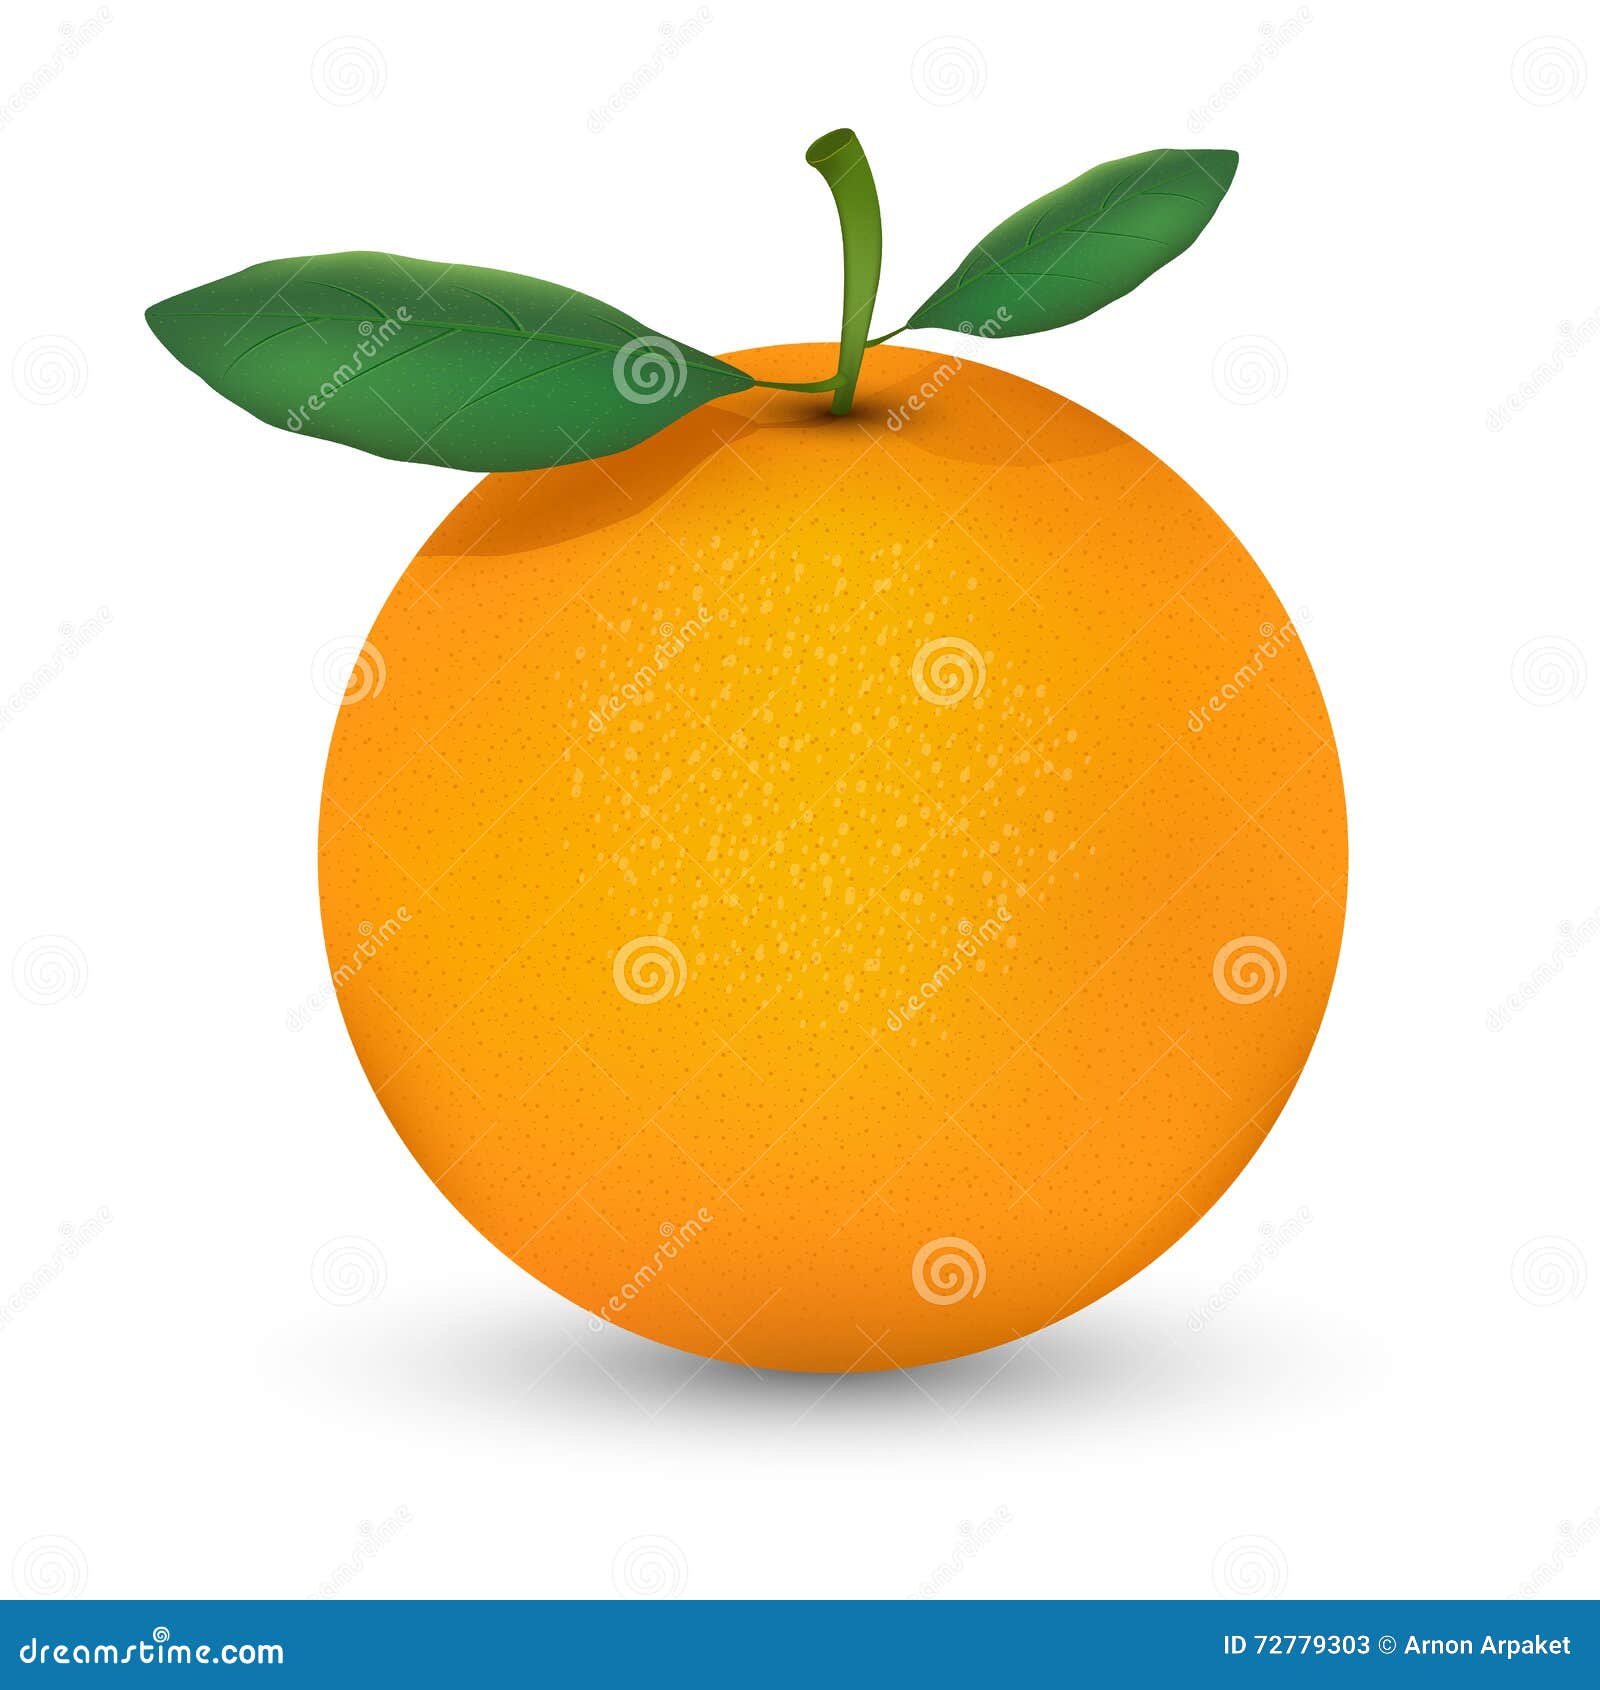 Orange Fruit Illustration Isolate on White Background Stock Vector ...